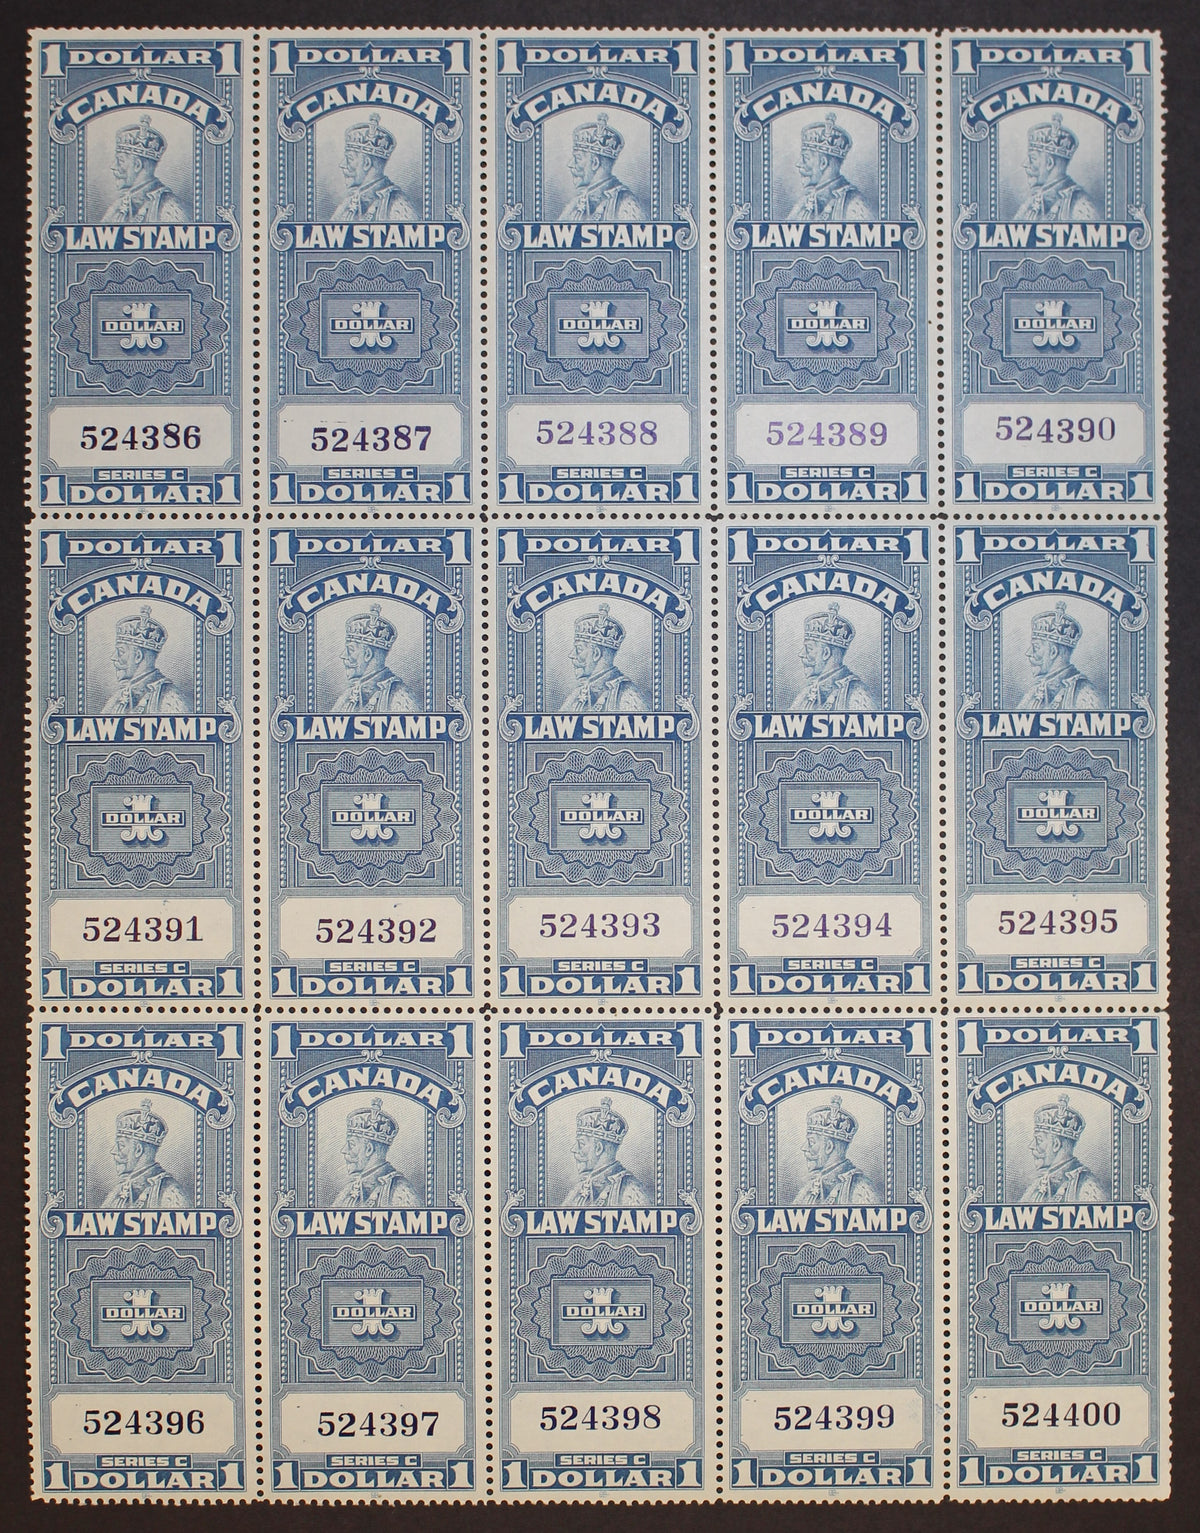 0018SC2403 - FSC18 - Mint Partial Sheet of 15